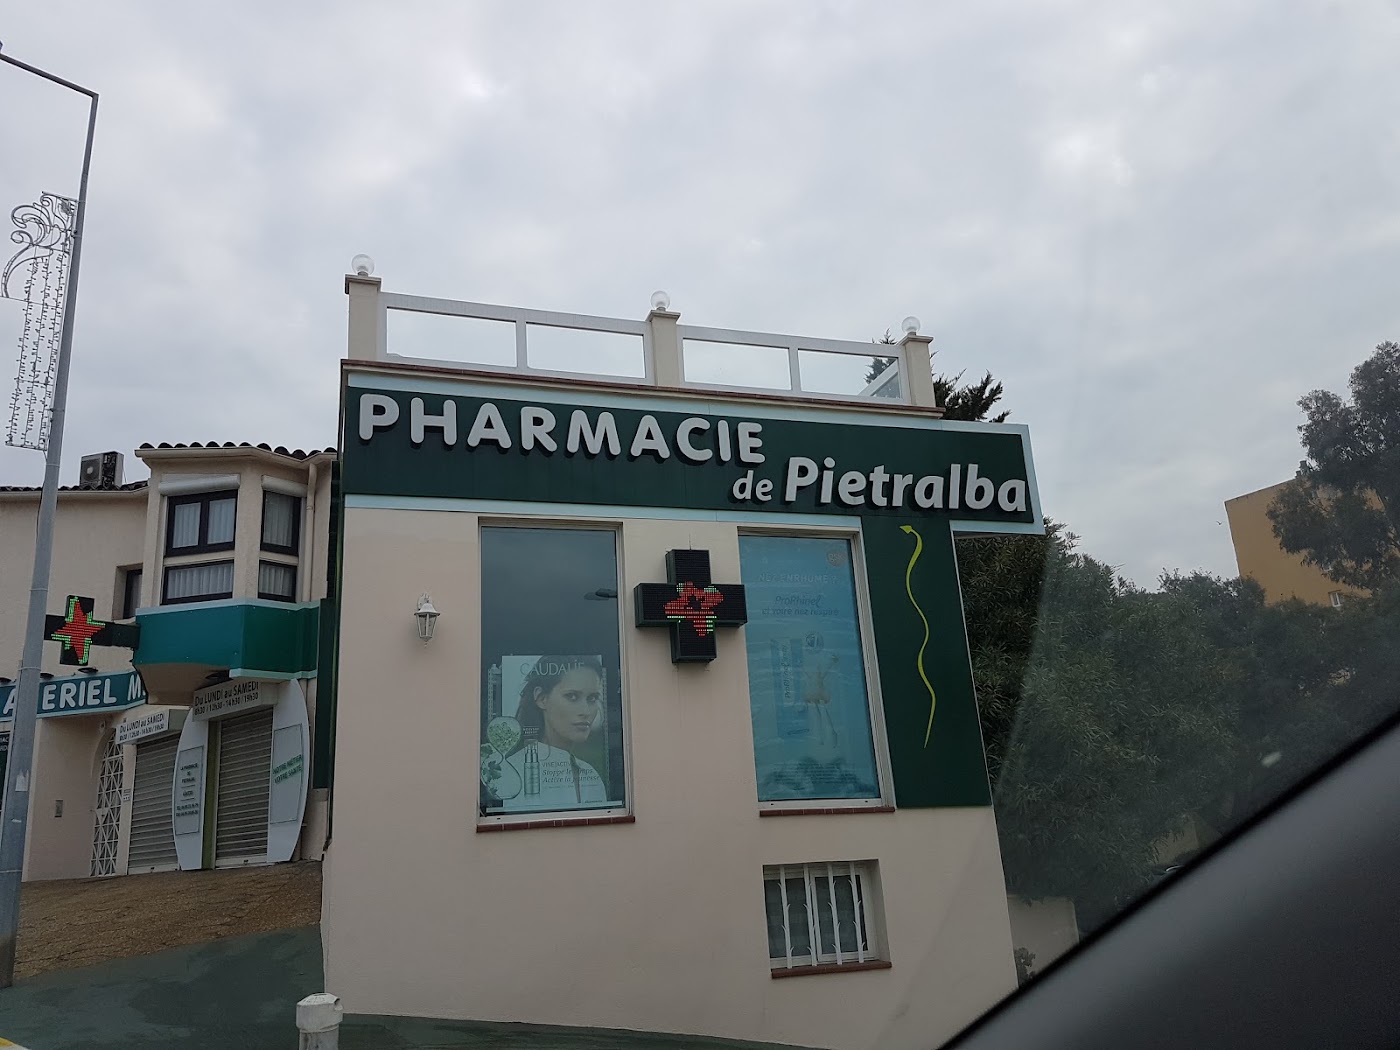 Pharmacie de Pietralba